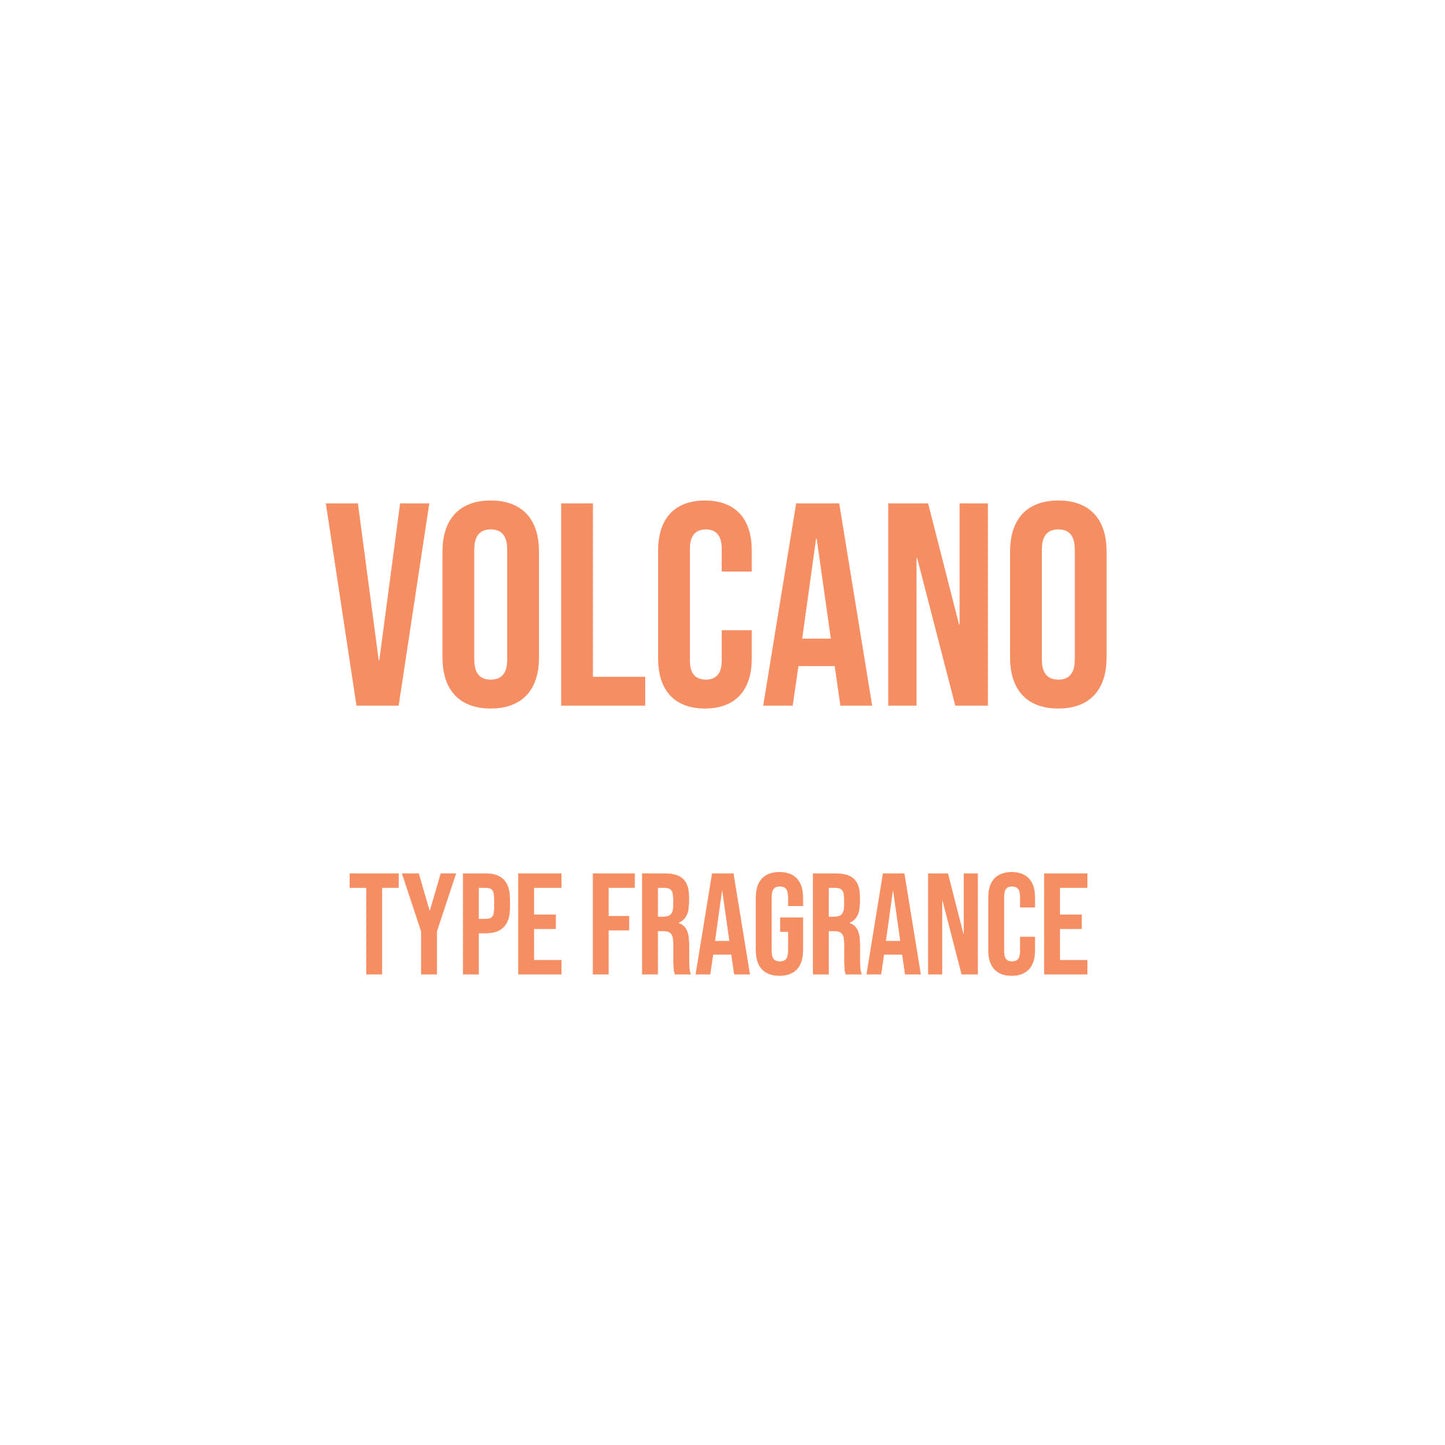 Volcano Type Fragrance